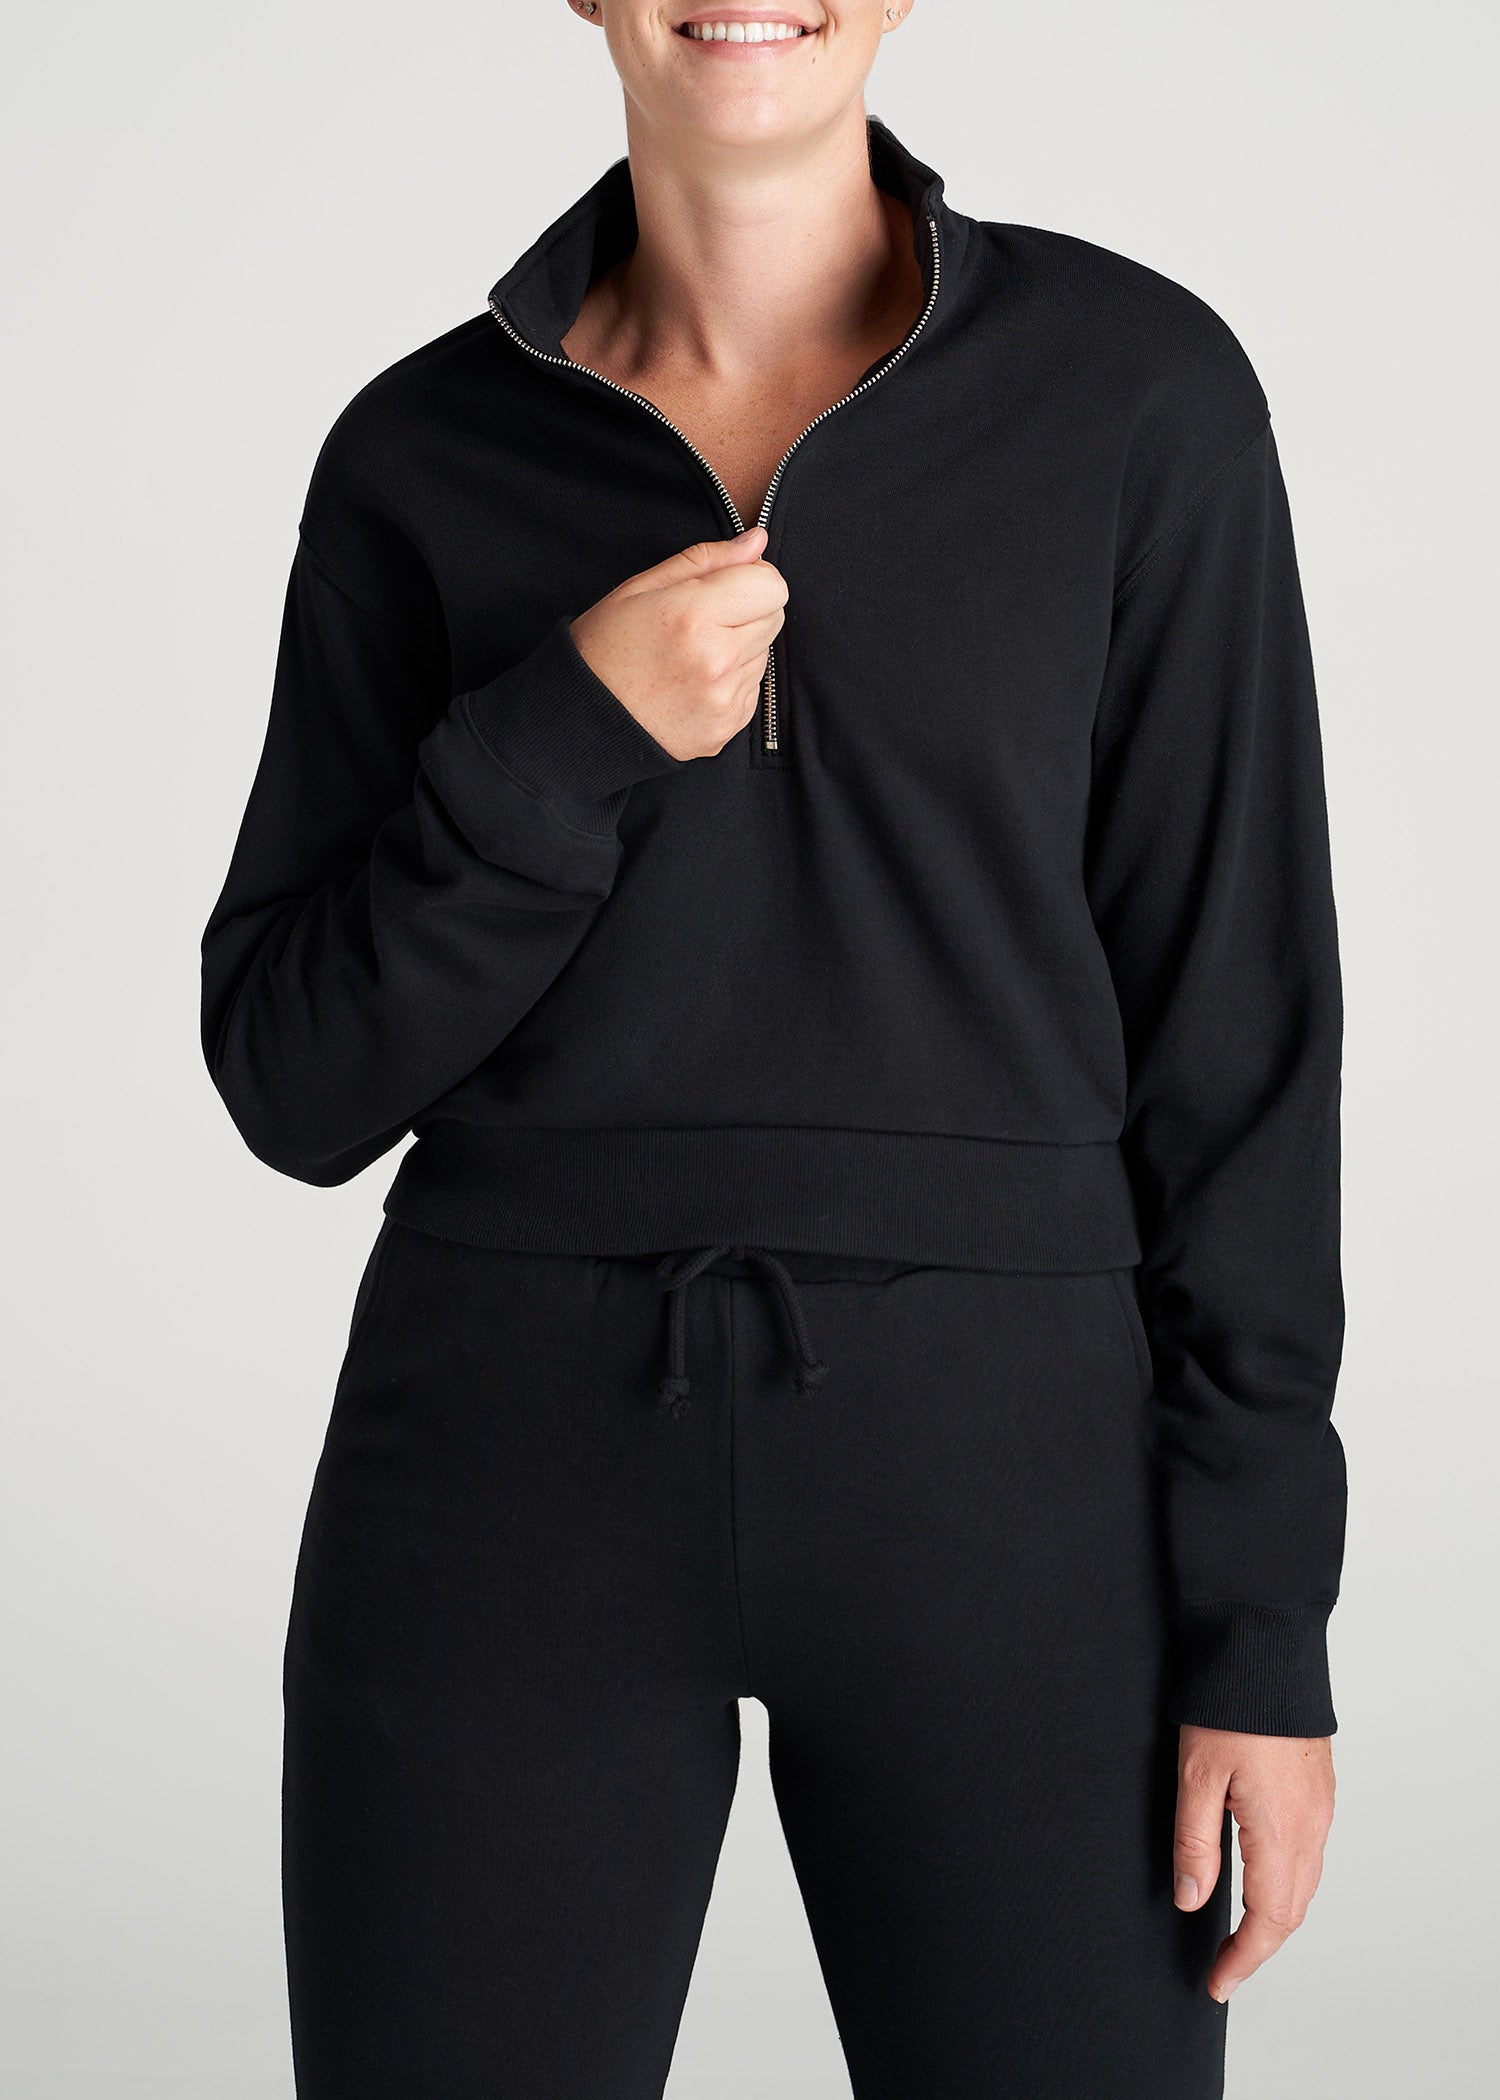 Wearever Cropped Half-Zip Women's Tall Sweatshirt